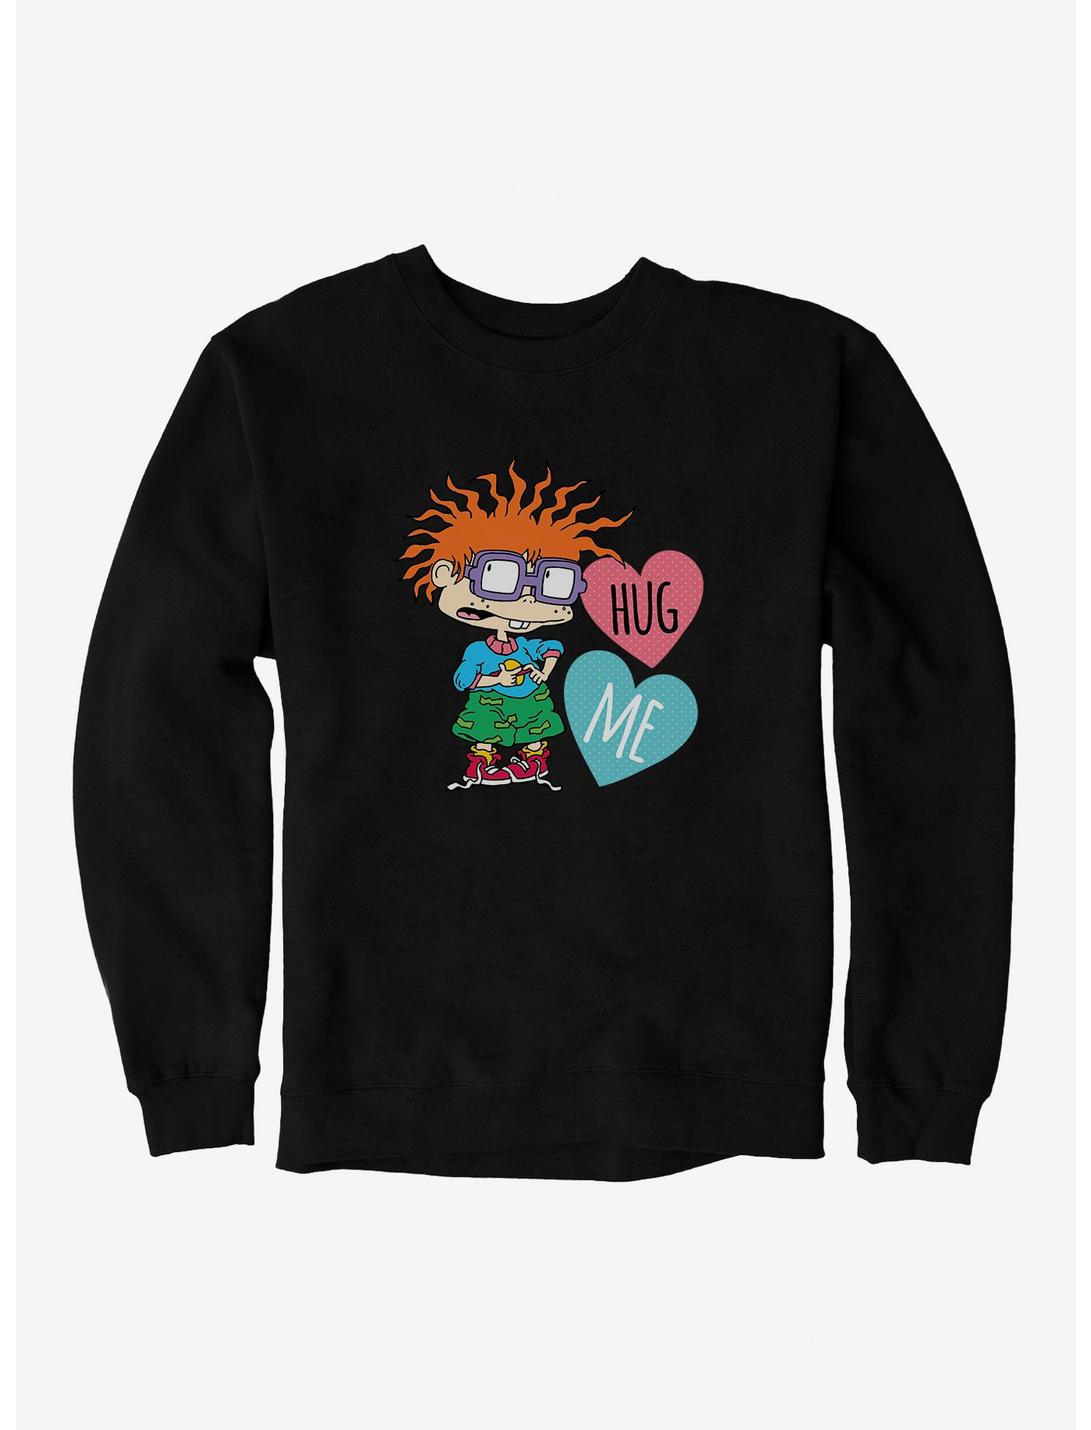 Rugrats Chuckie Hug Me Sweatshirt, BLACK, hi-res